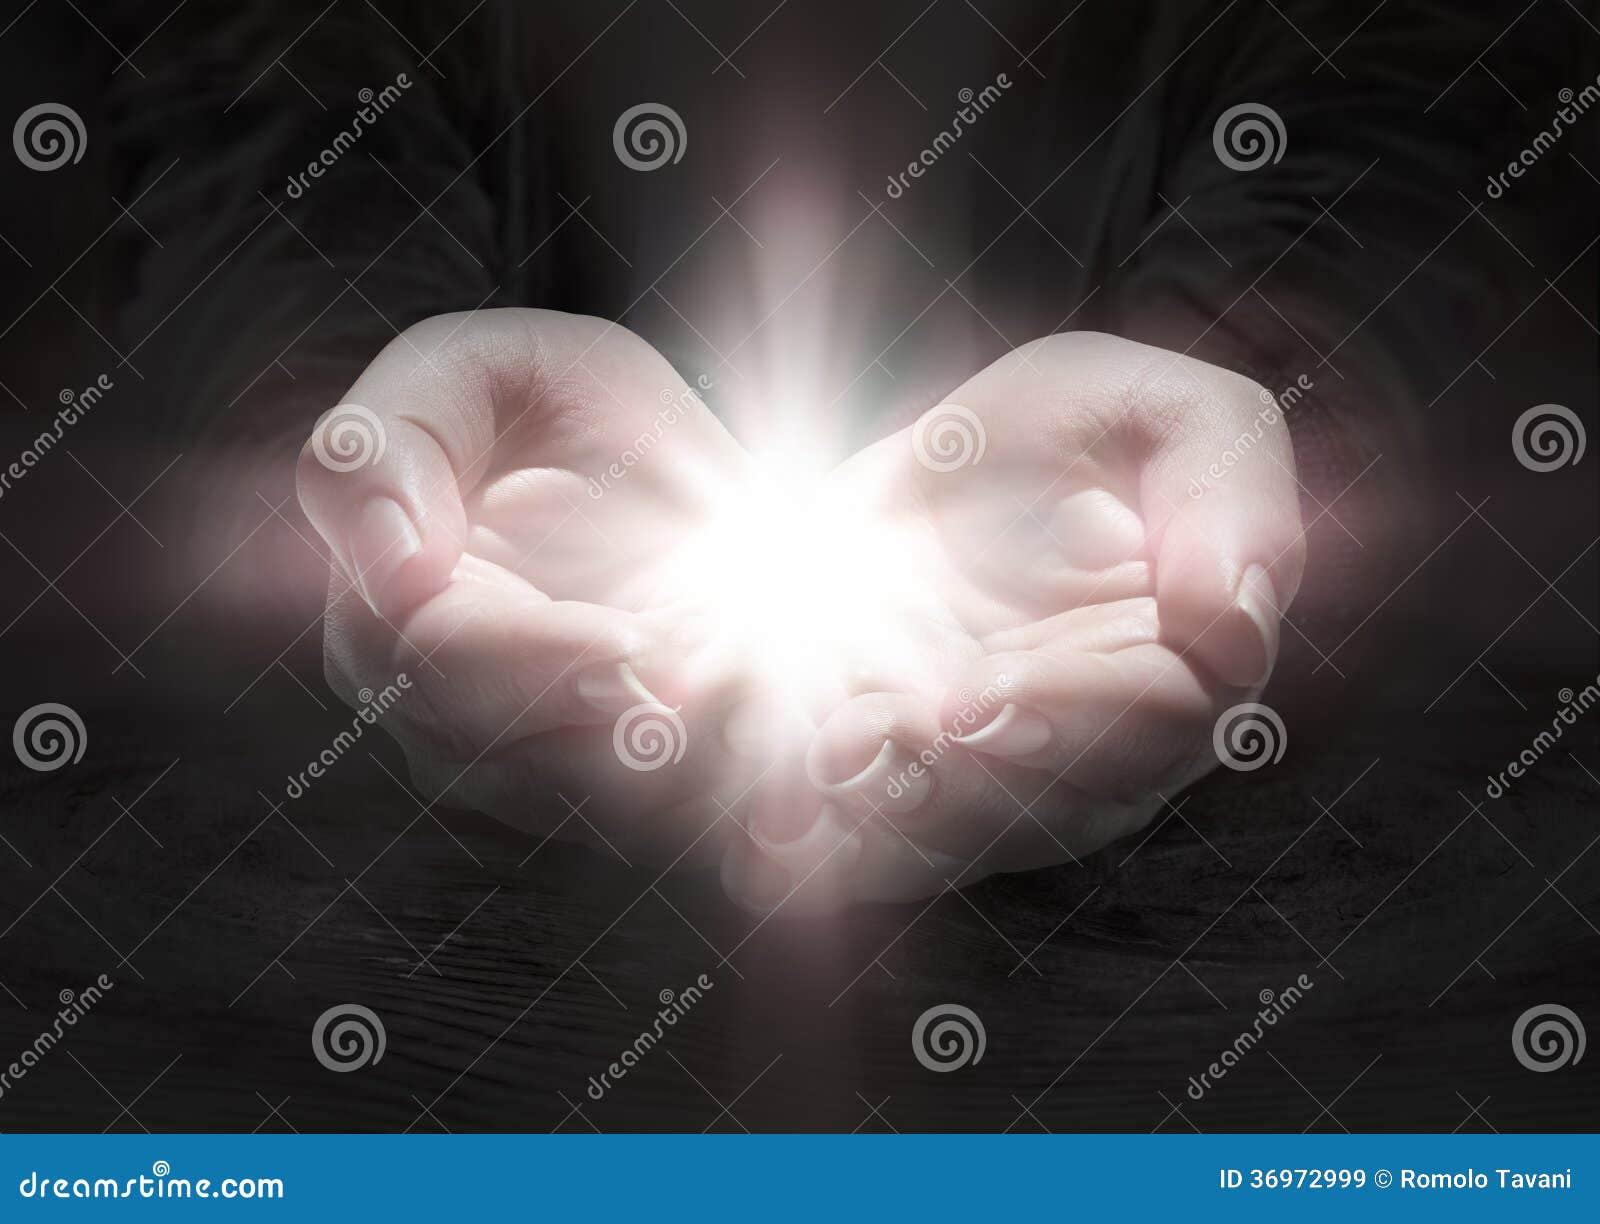 light in hands - pray the crucifix